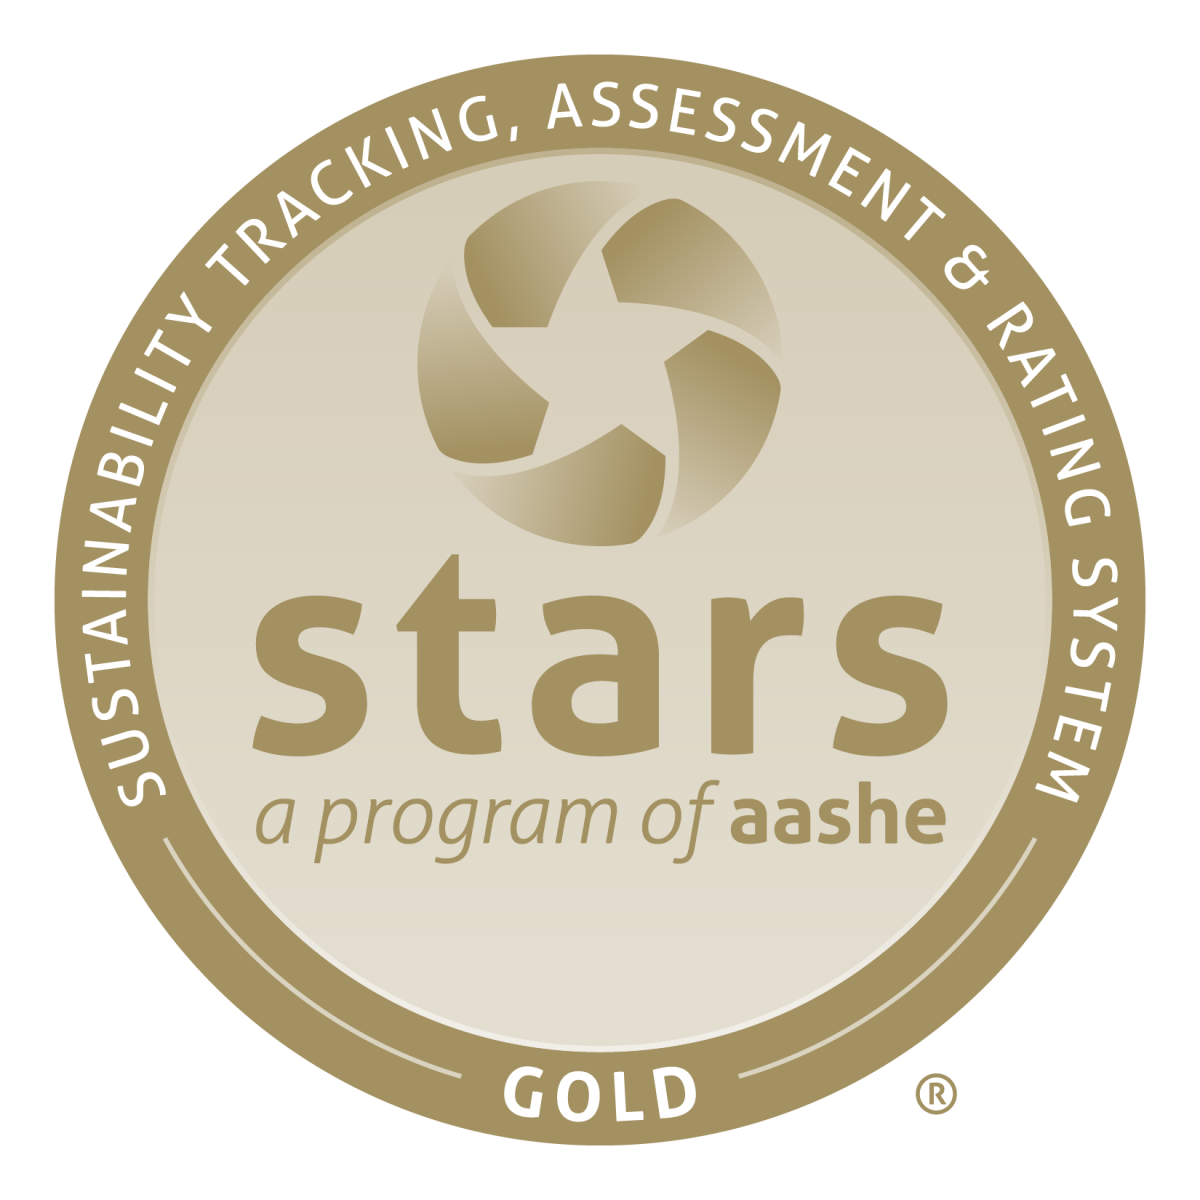 Stars a program of aashe - Gold seal